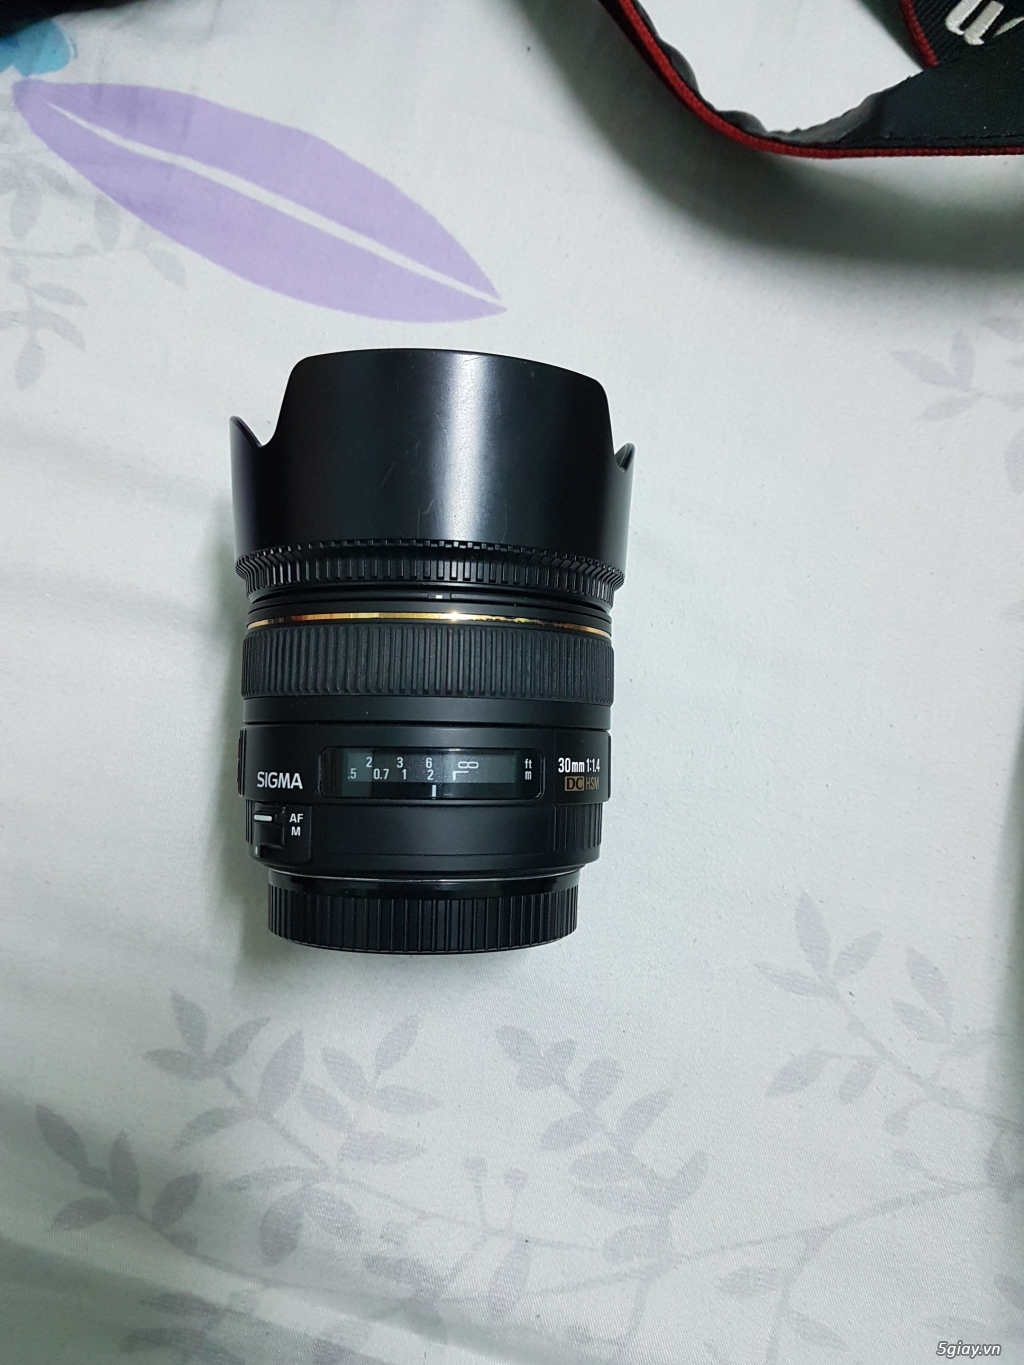 Canon 60D, Lens Sigma 30 f1.4, 55-250mm IS II, flash Nissin di622 II - 8